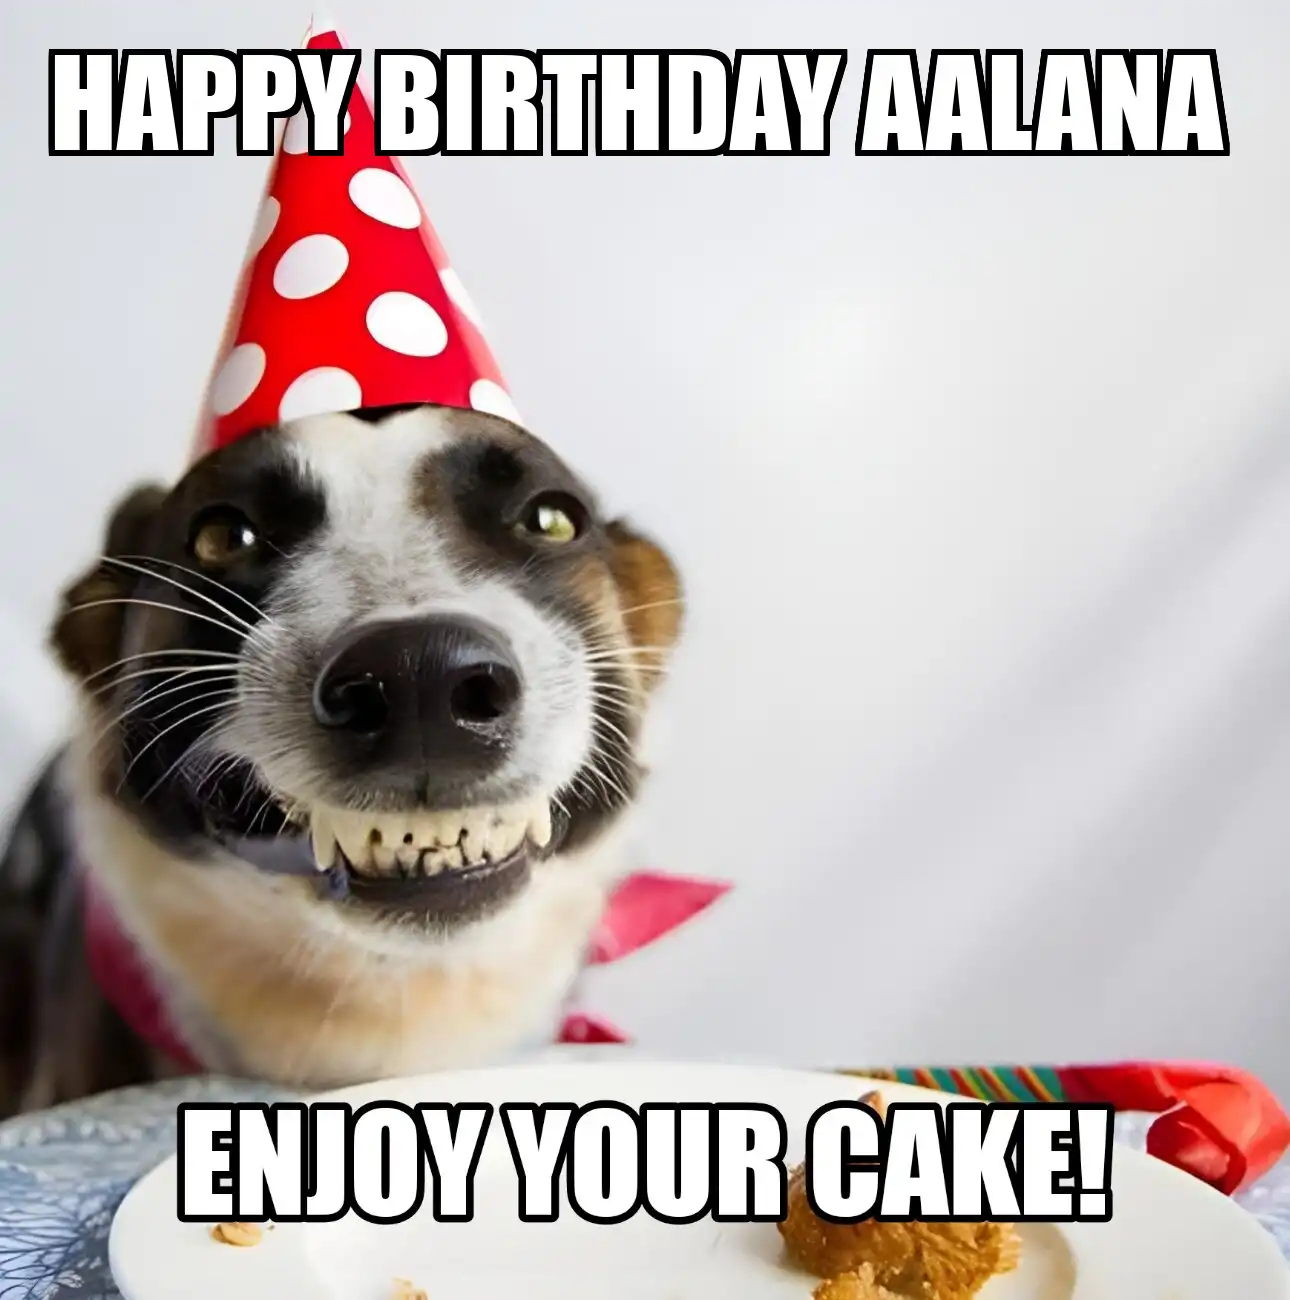 Happy Birthday Aalana Enjoy Your Cake Dog Meme